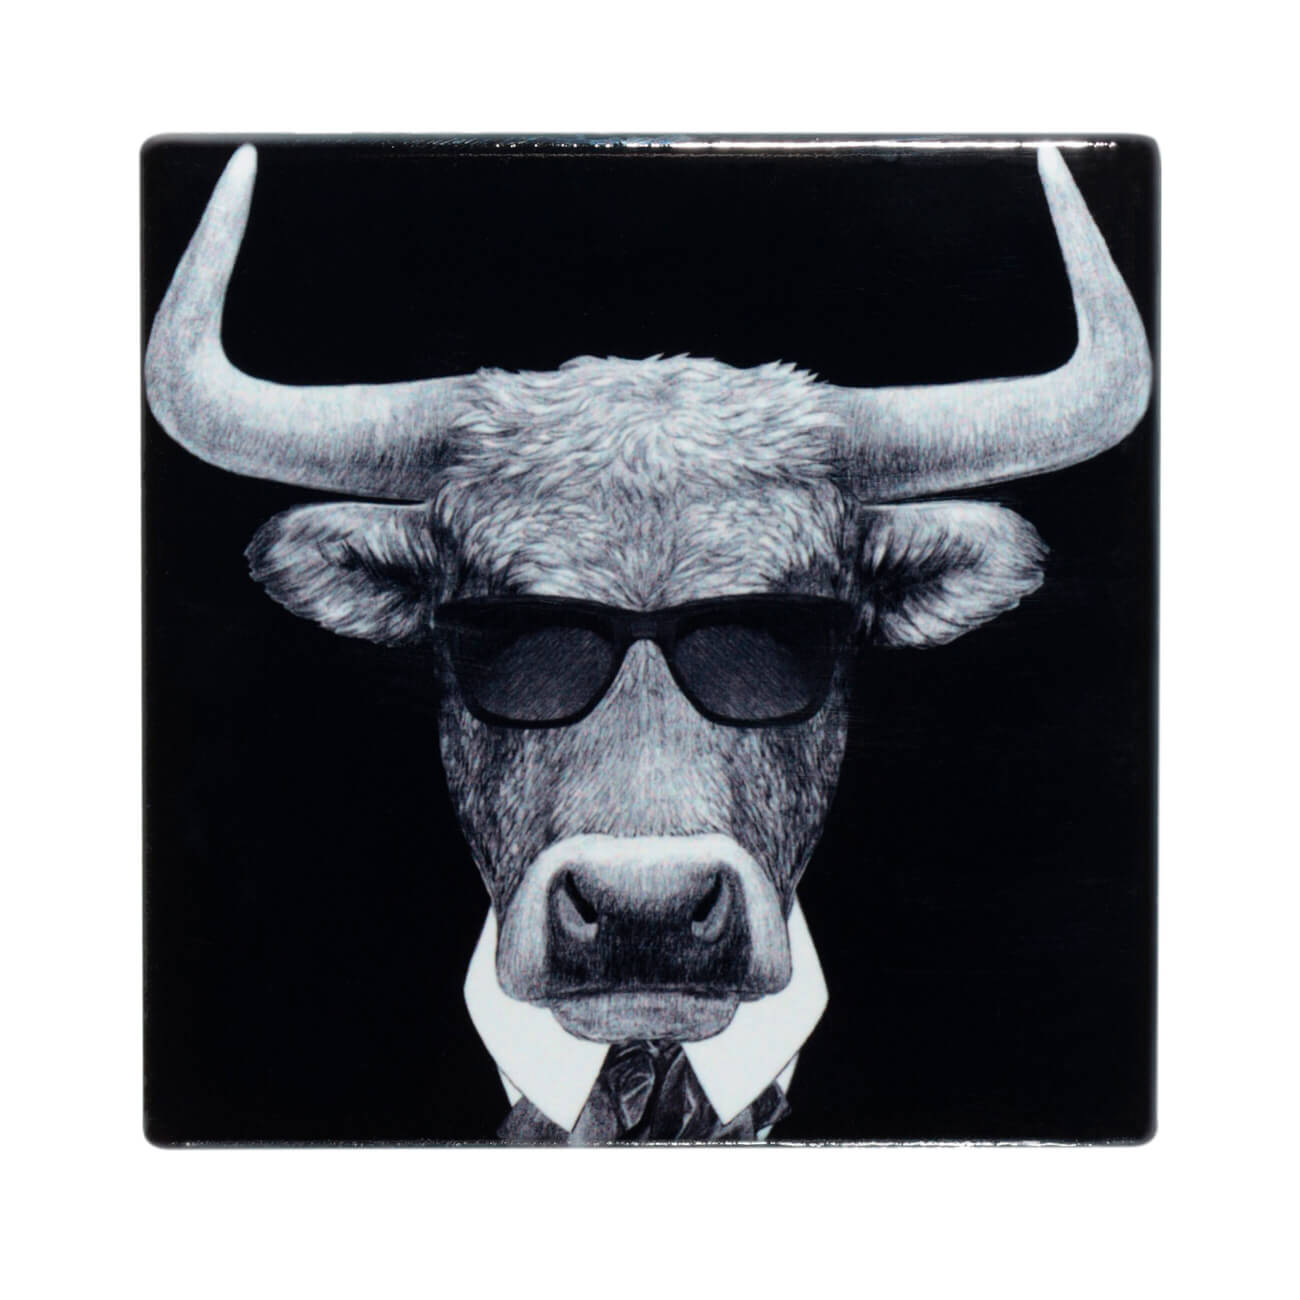 Mug stand, 11x11 cm, ceramic / cork, square, Bull with glasses, Brutal style изображение № 1